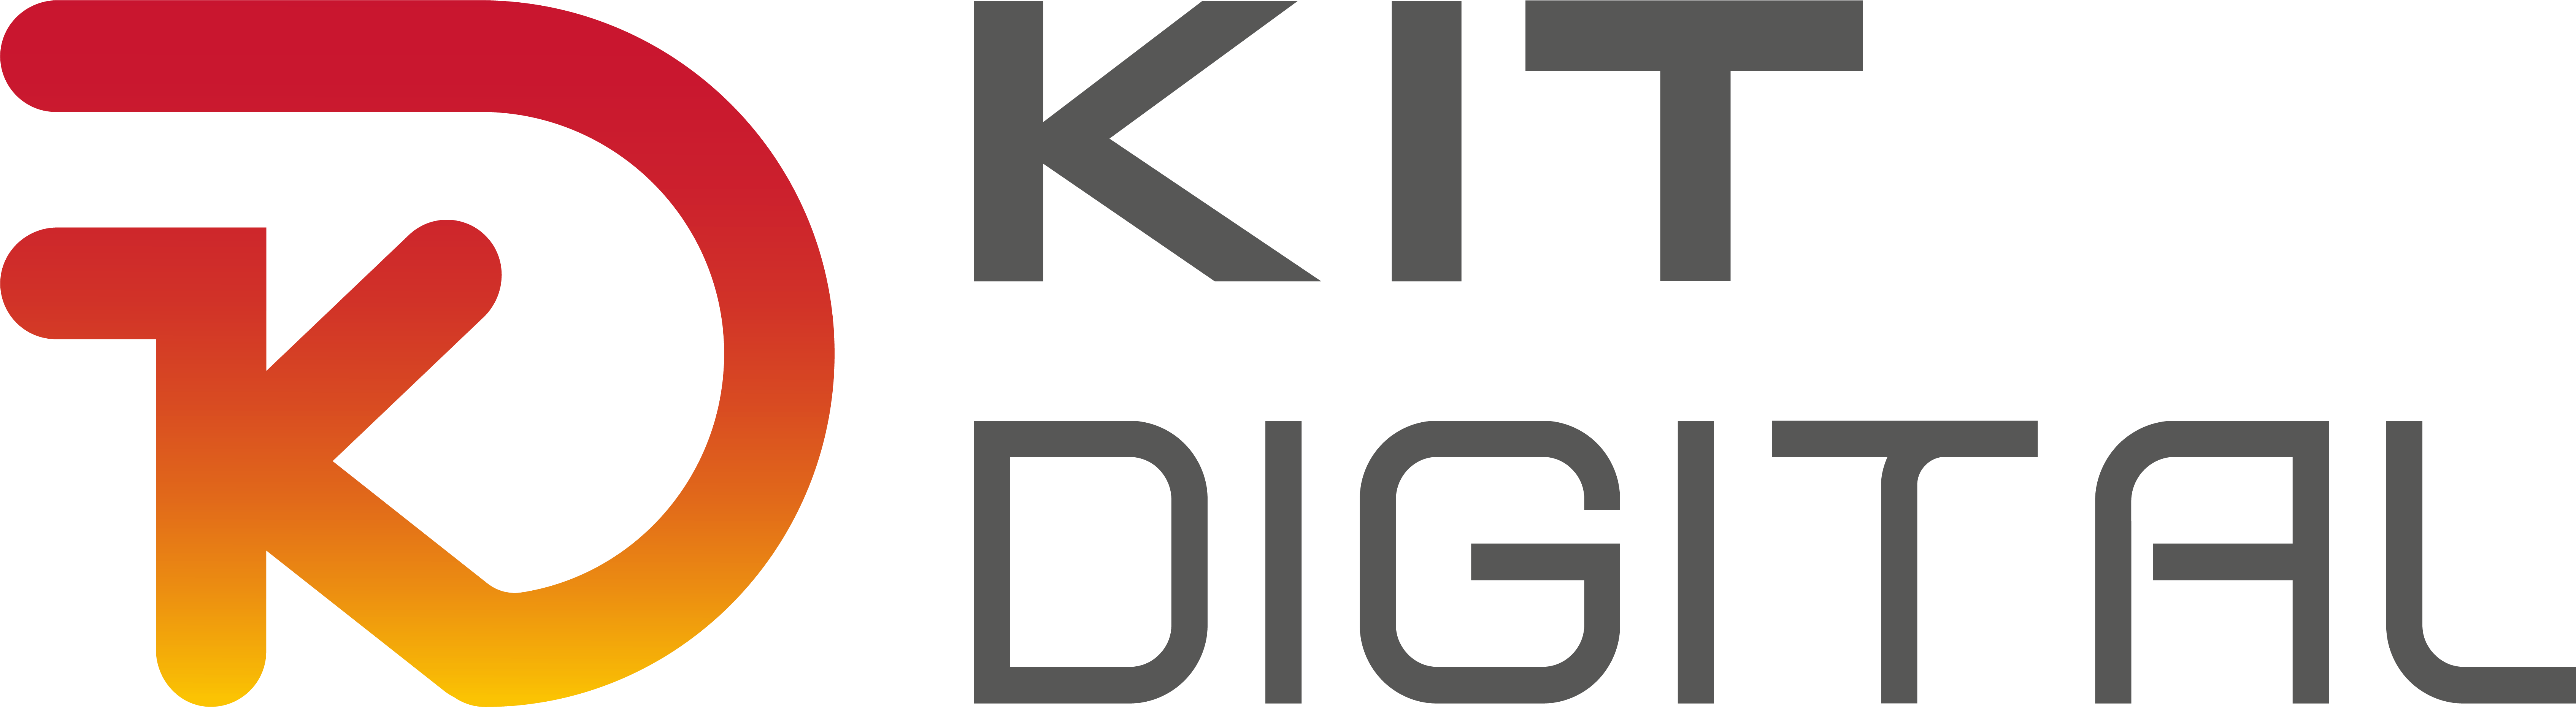 kit digital - acelerapyme